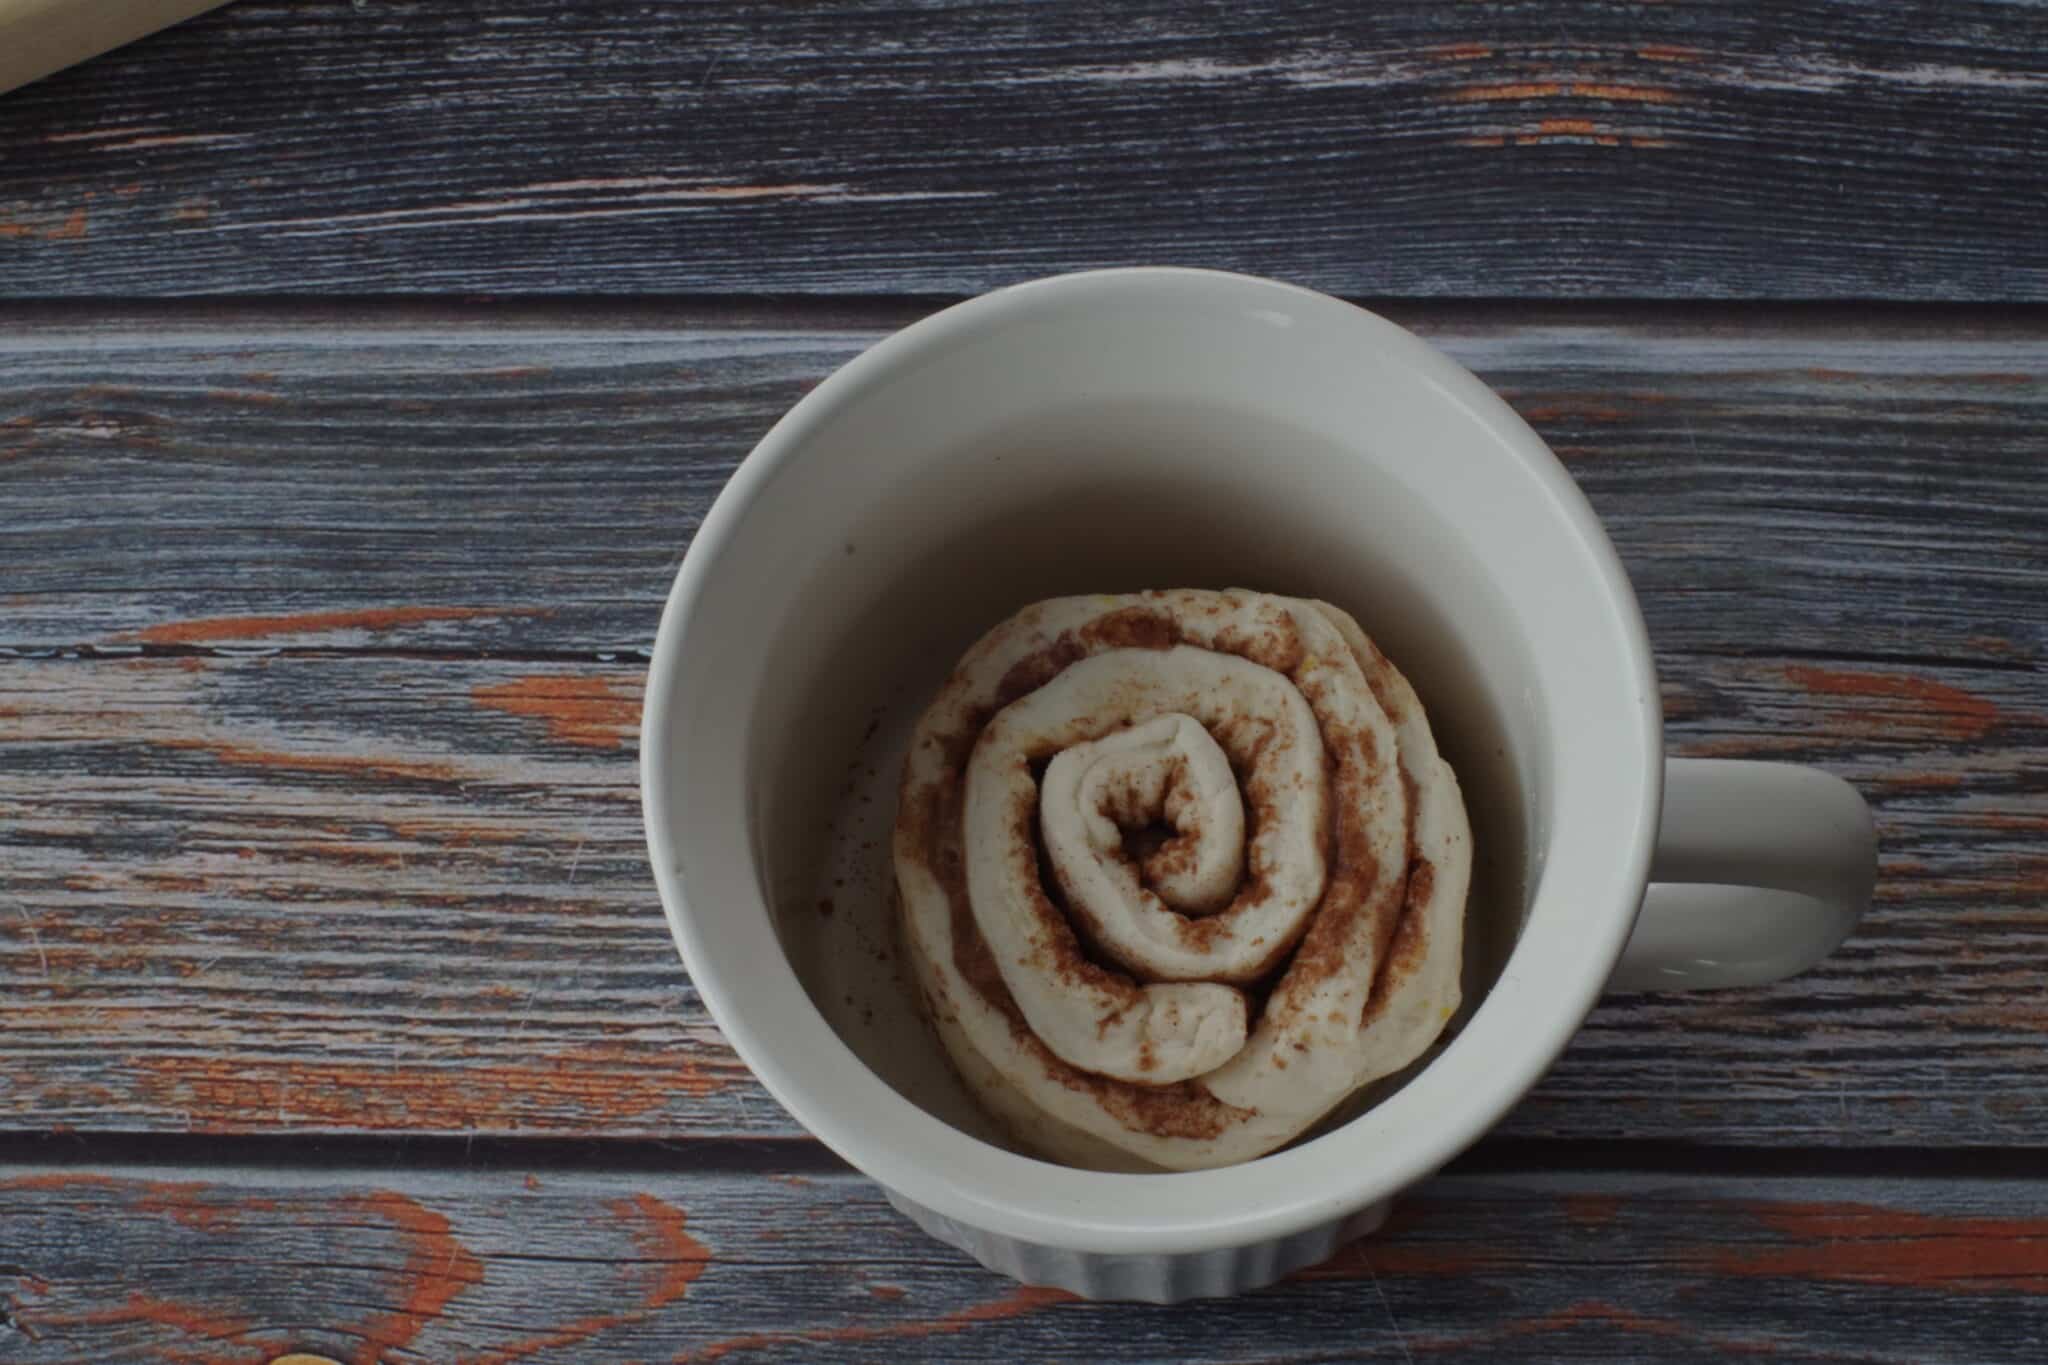 cinnamon roll dough placed inside a meal mug